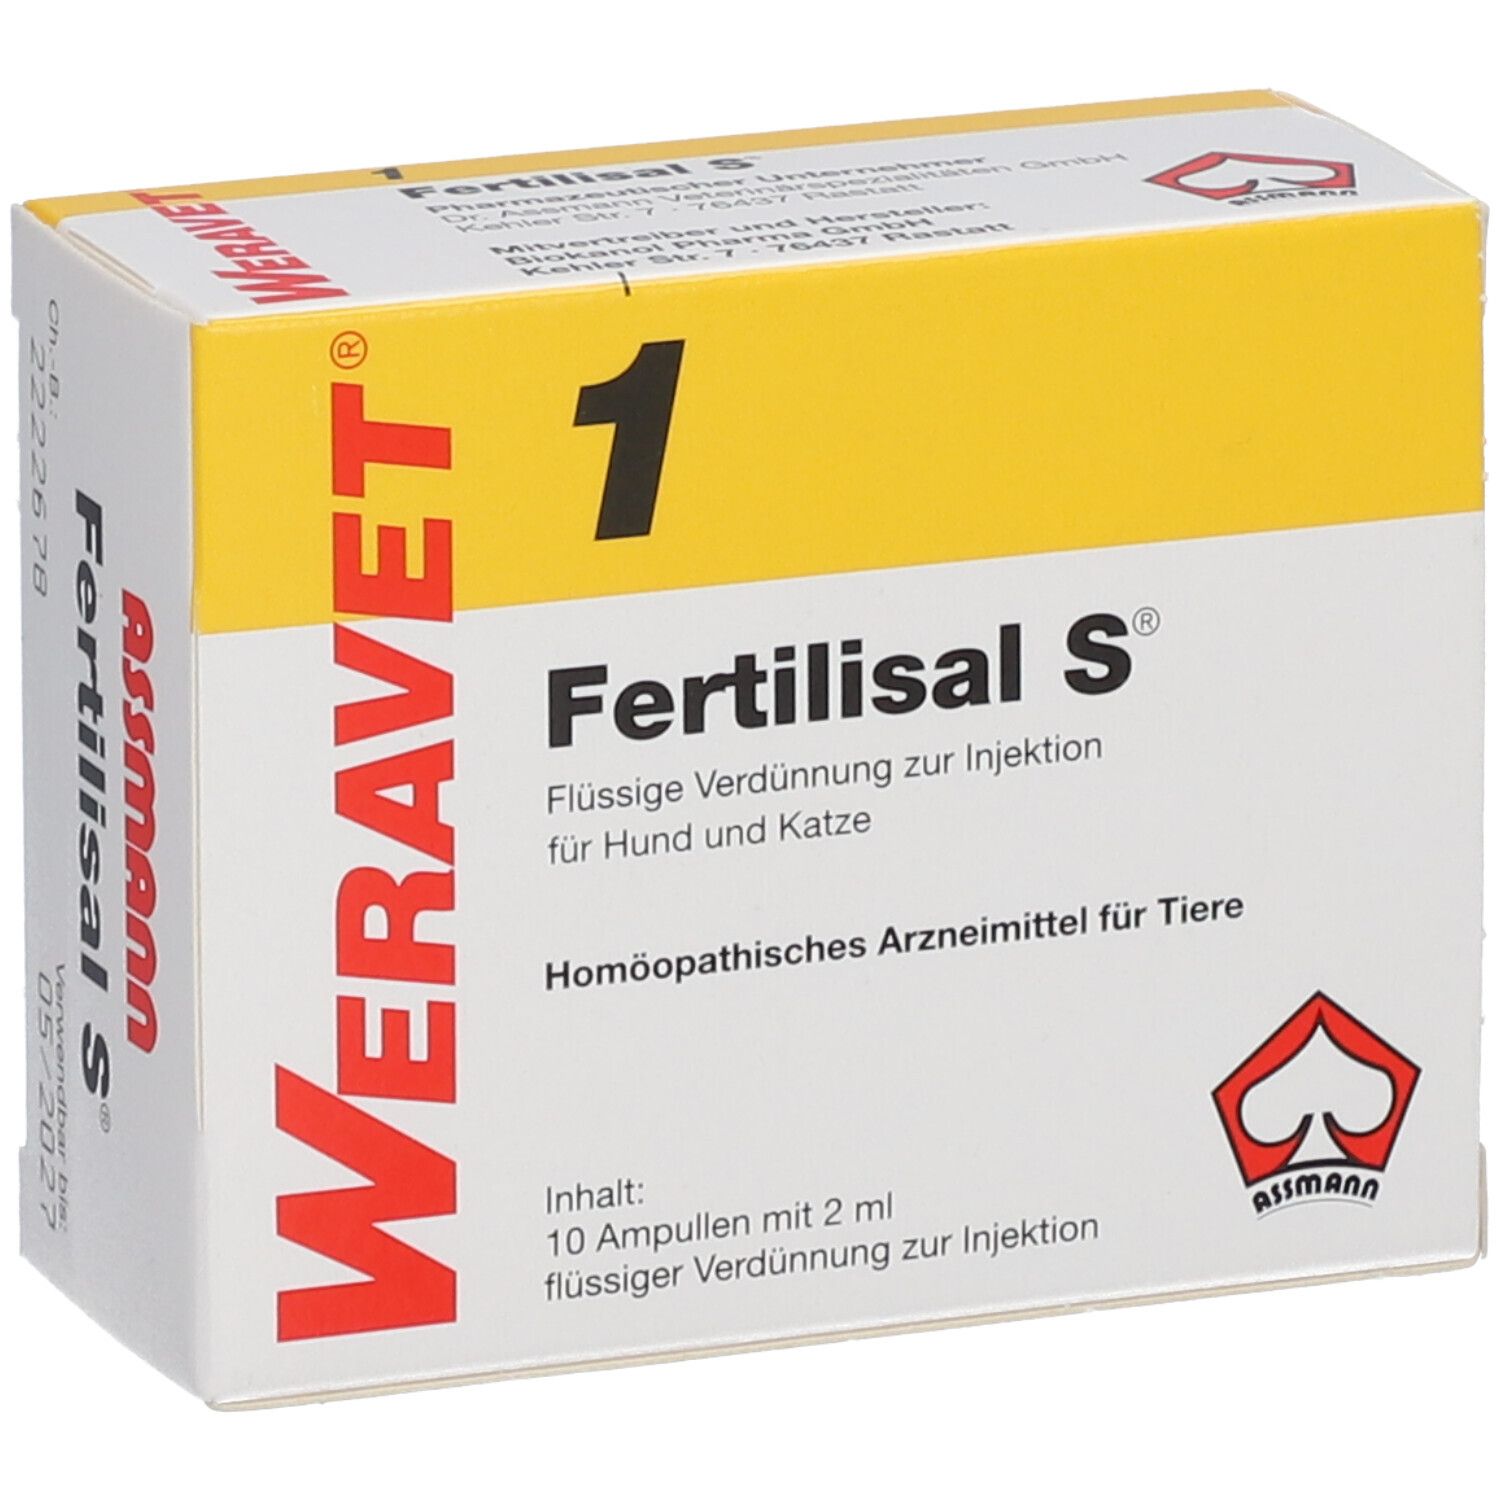 Weravet® 1 Fertilisal S